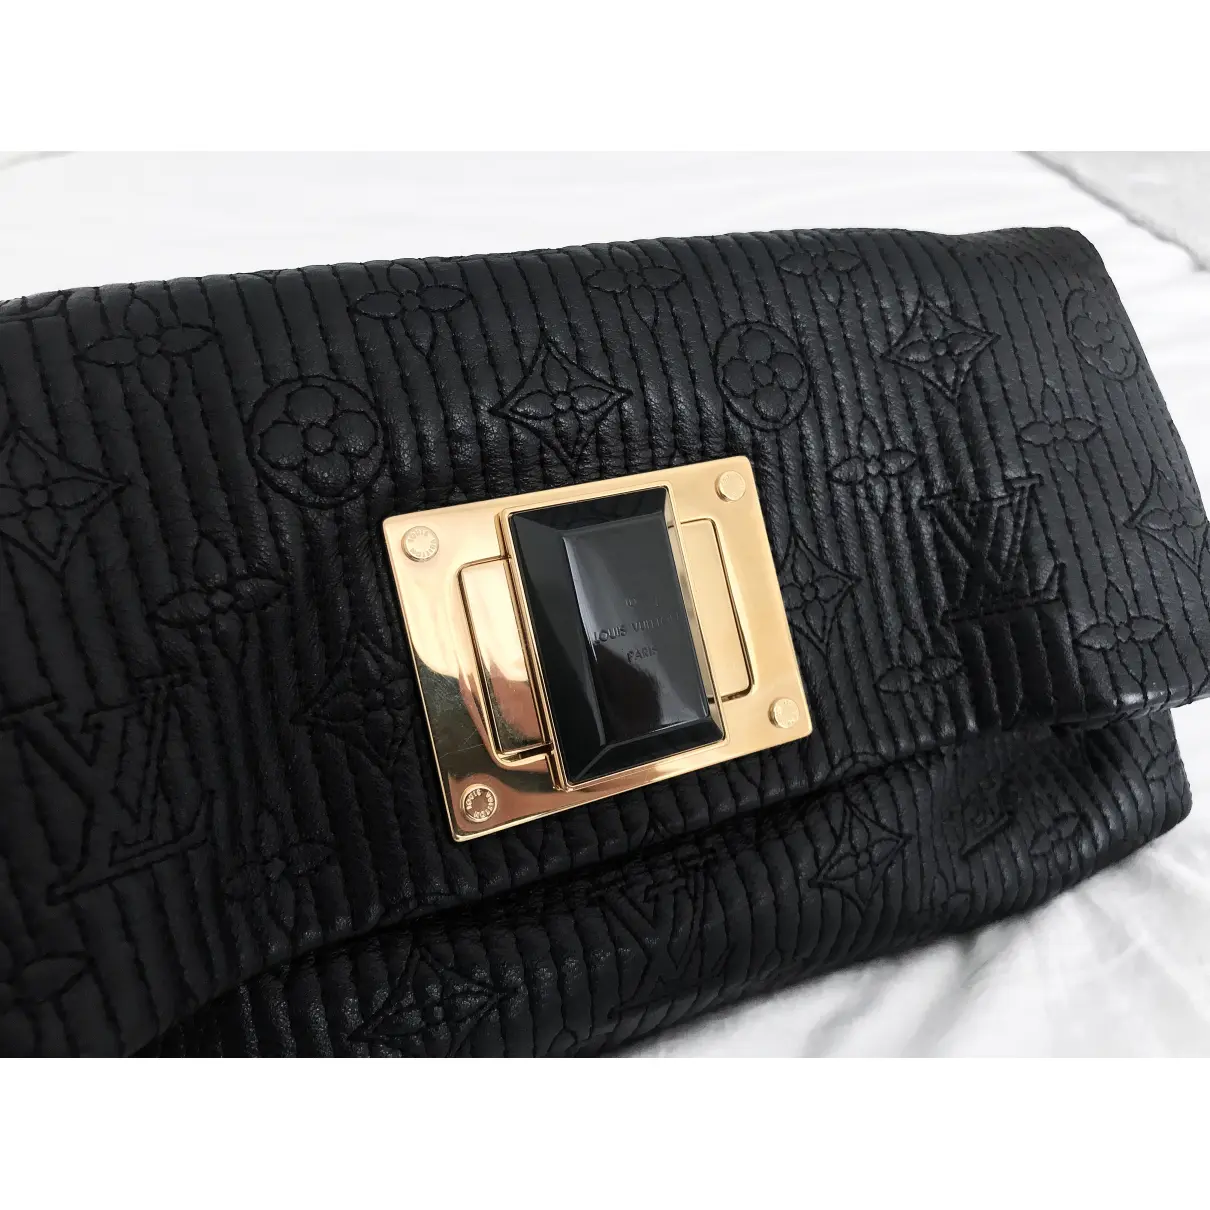 Buy Louis Vuitton Altair leather clutch bag online